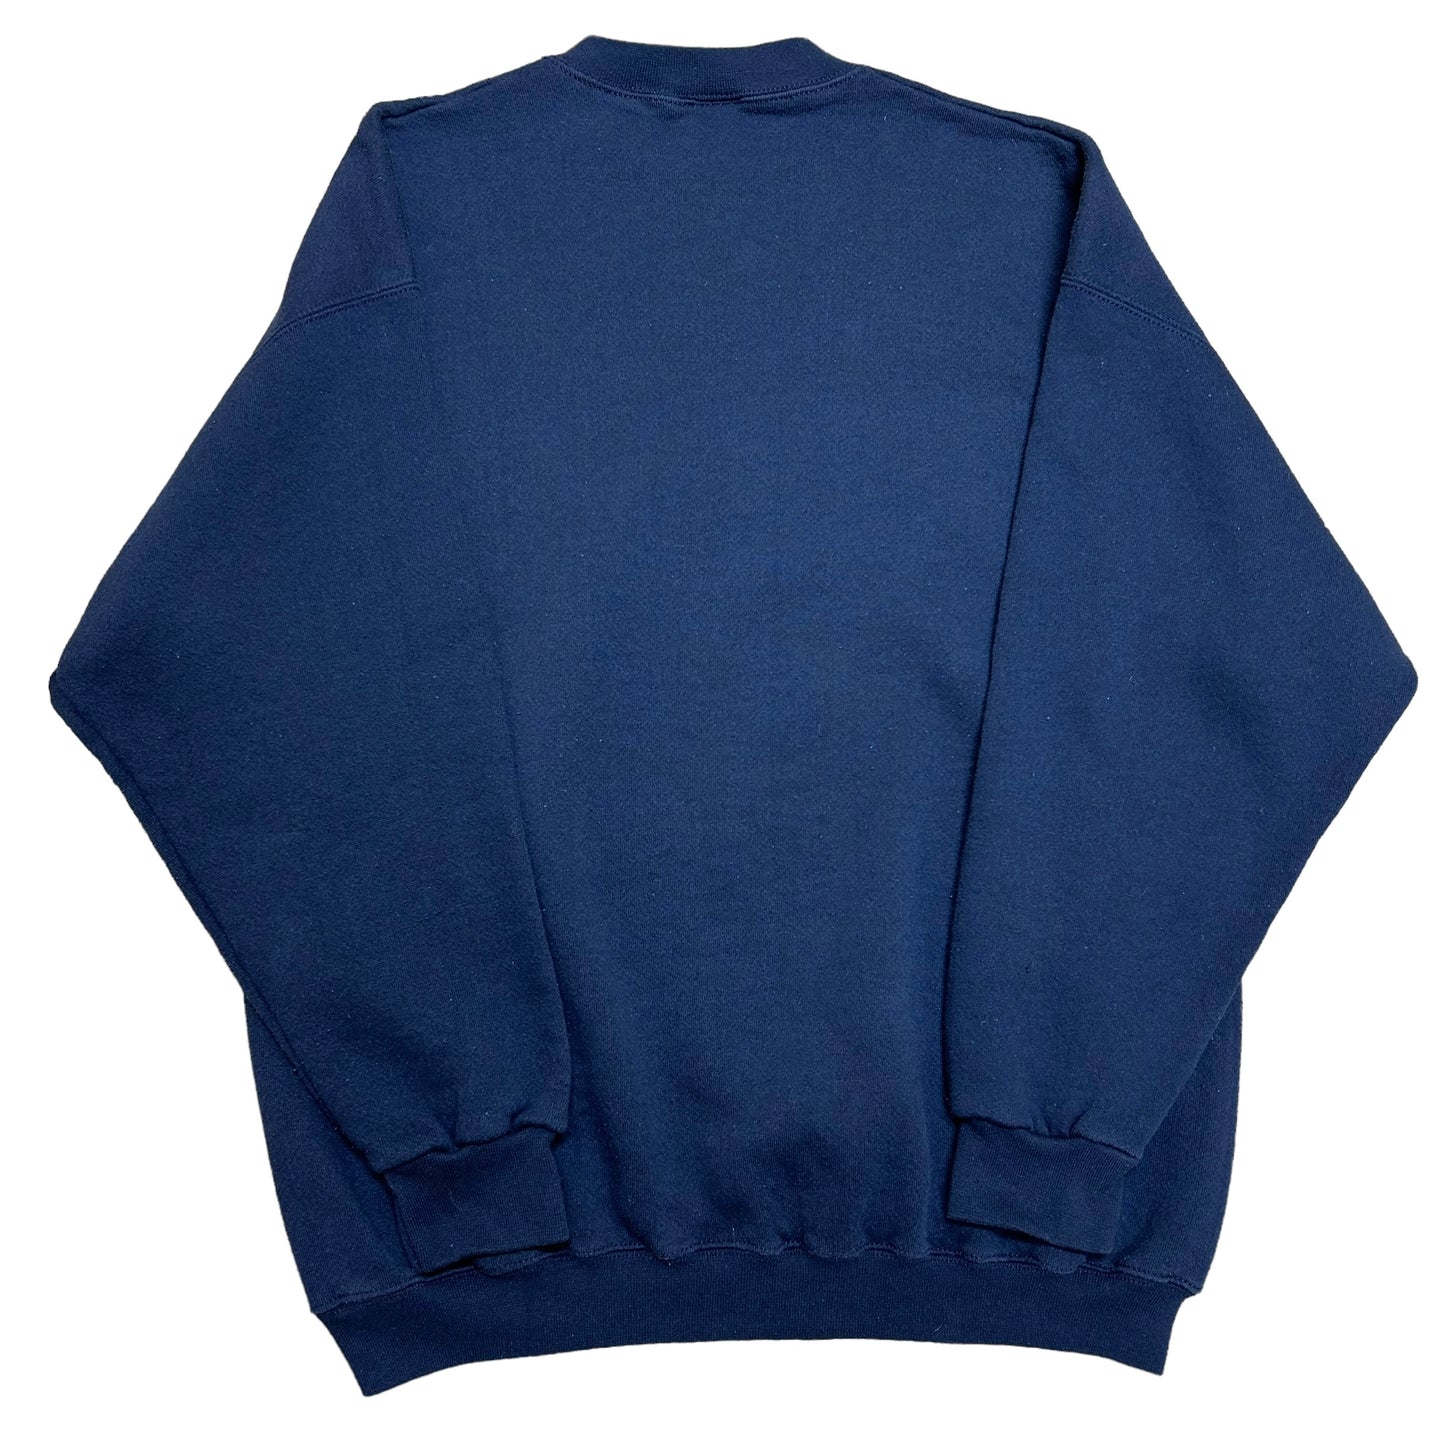 Vintage 1990s Navy Blue Deer/Nature Graphic Crewneck Sweatshirt - Size XL